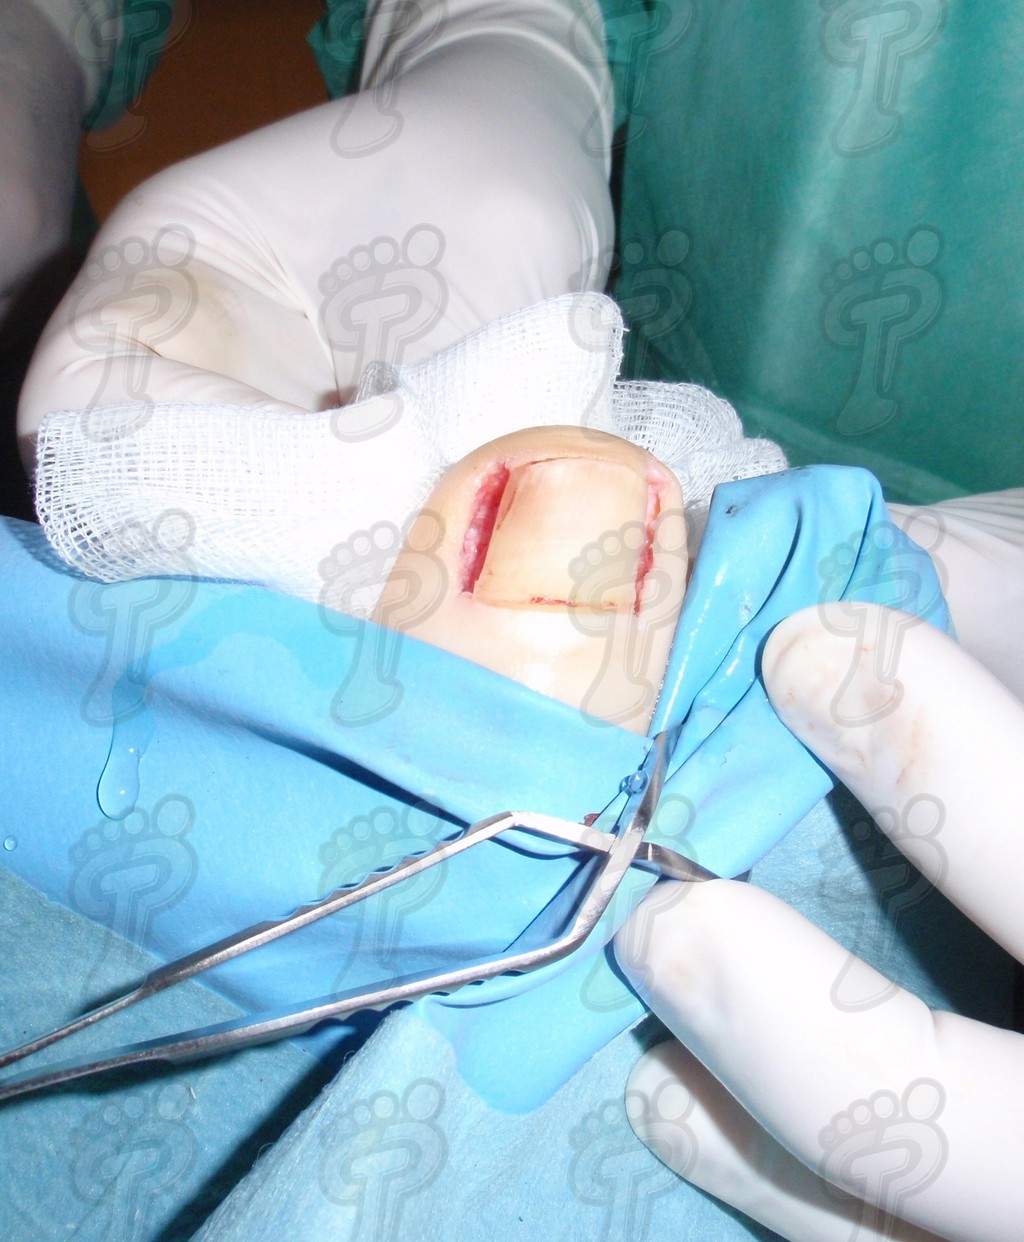 Unguinal surgery minimally invasive